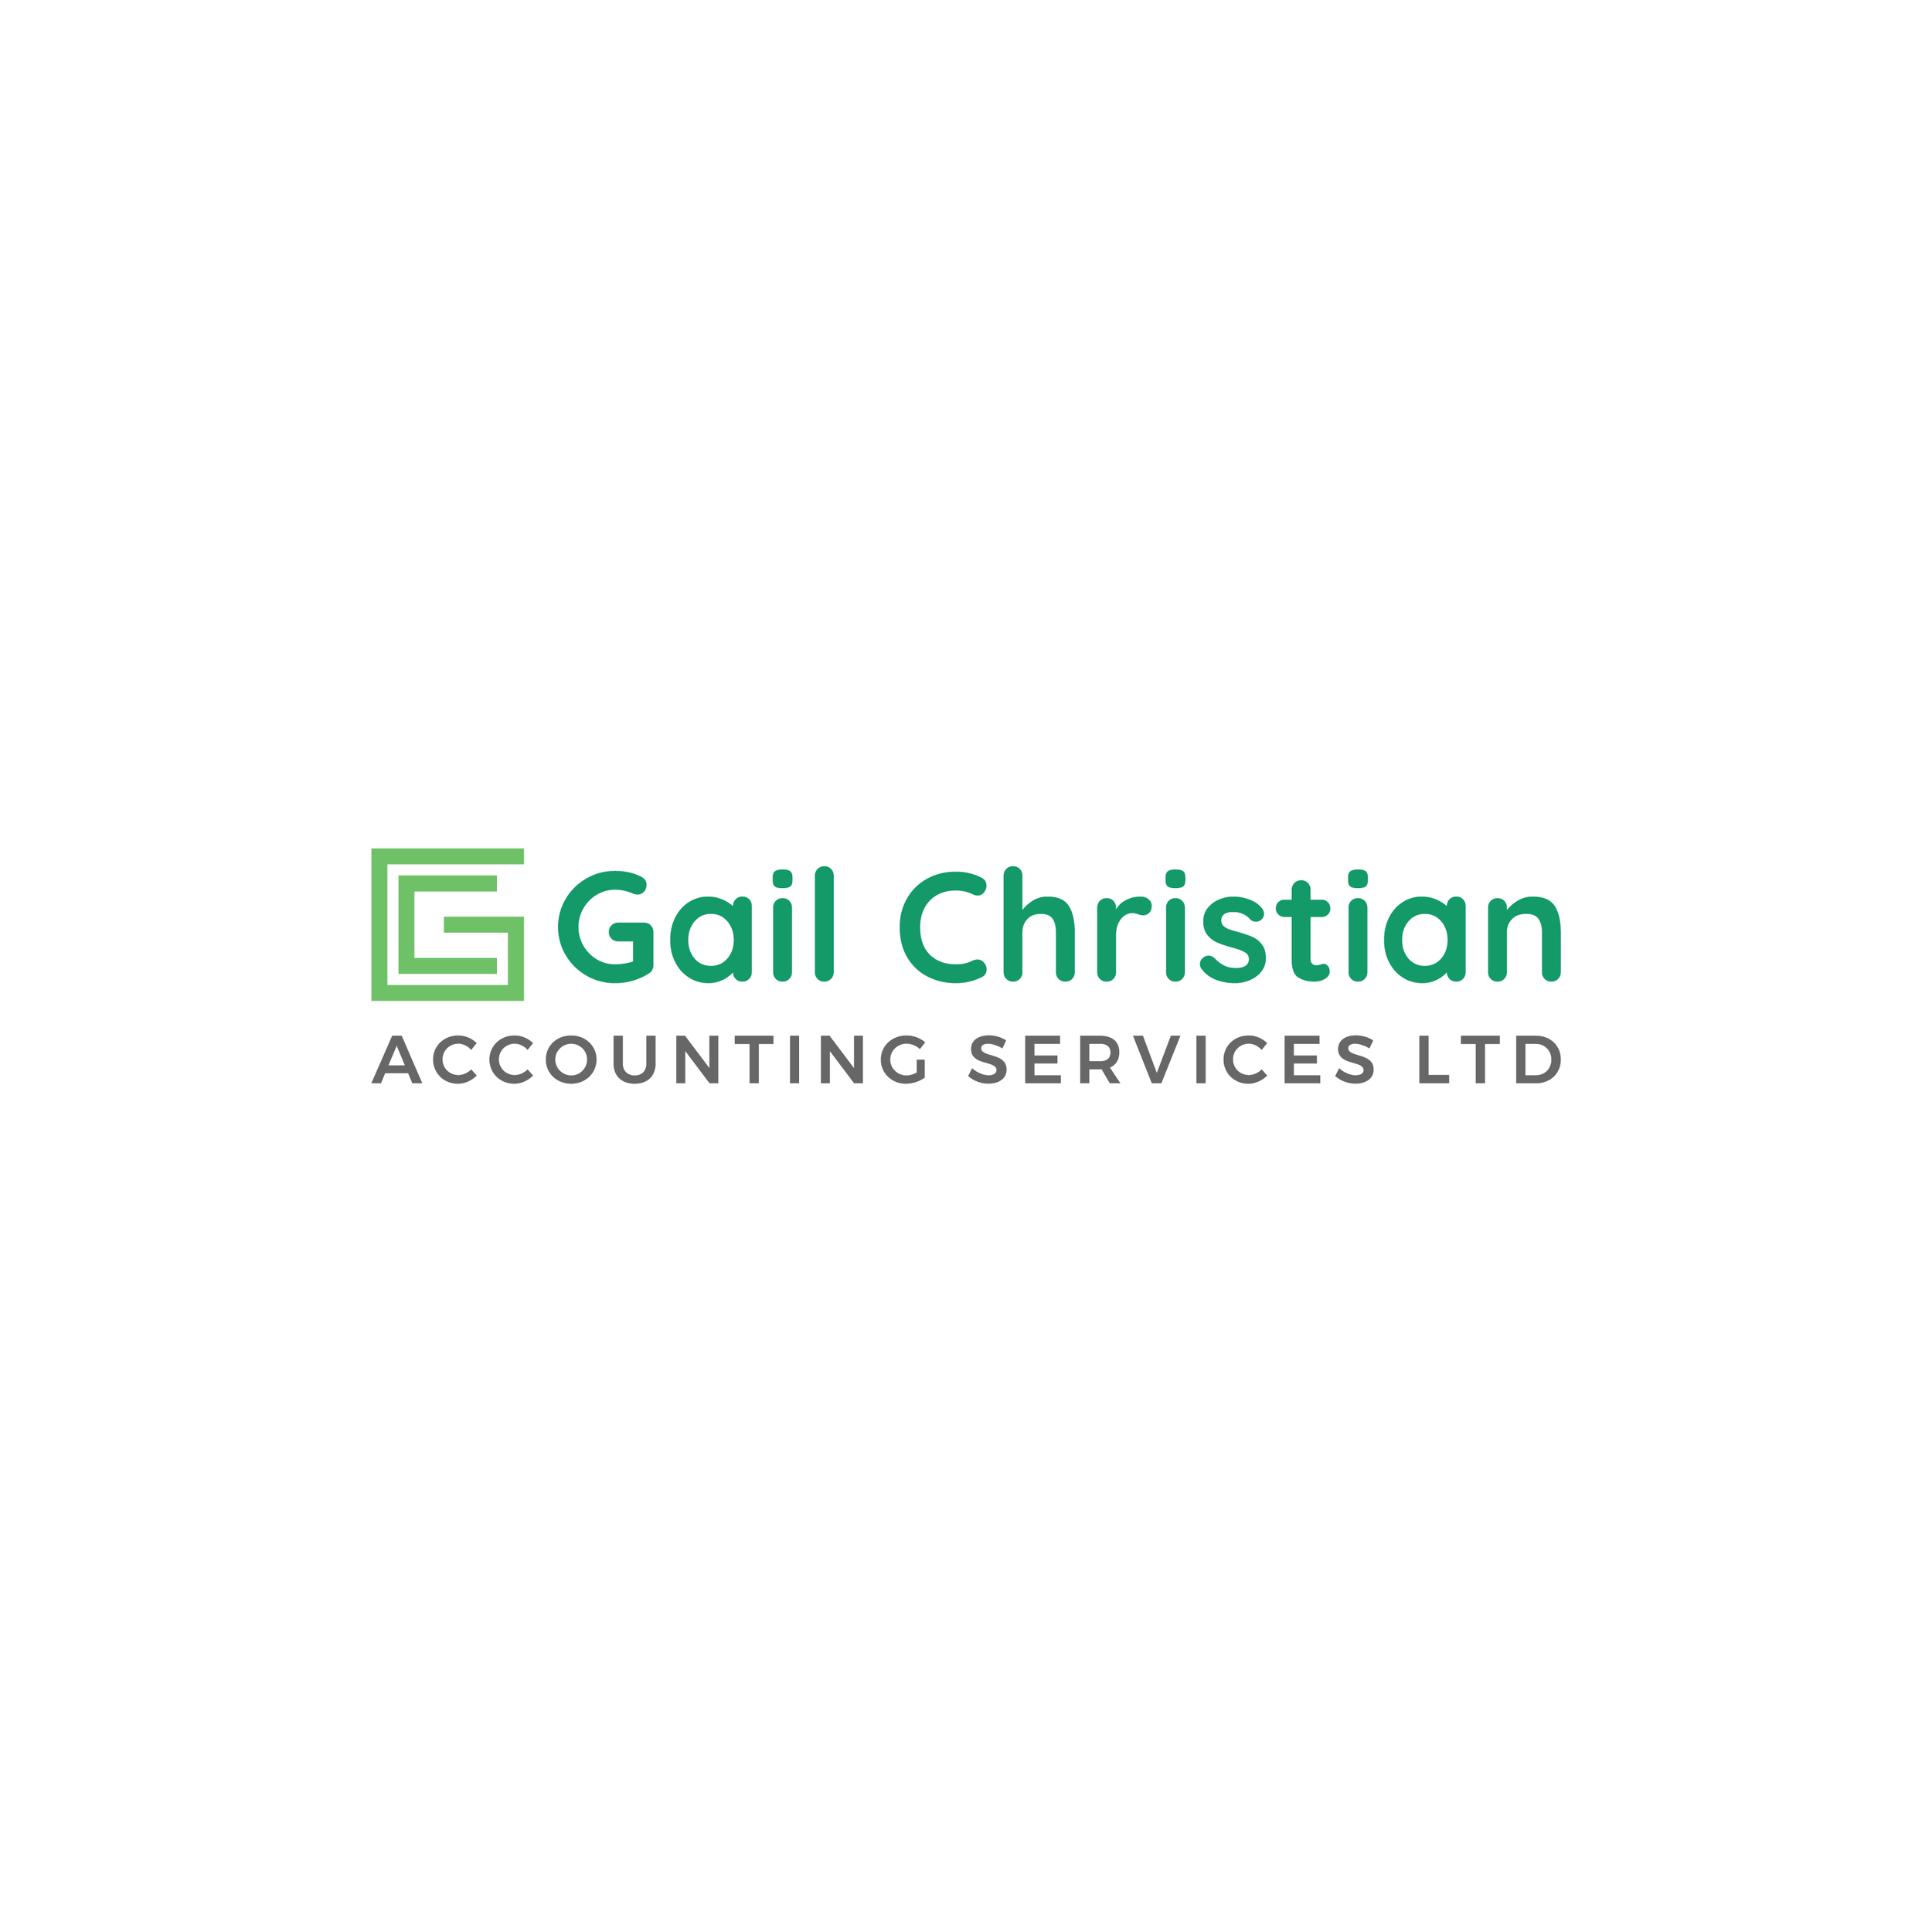 Gail Christian Accounting Services Ltd